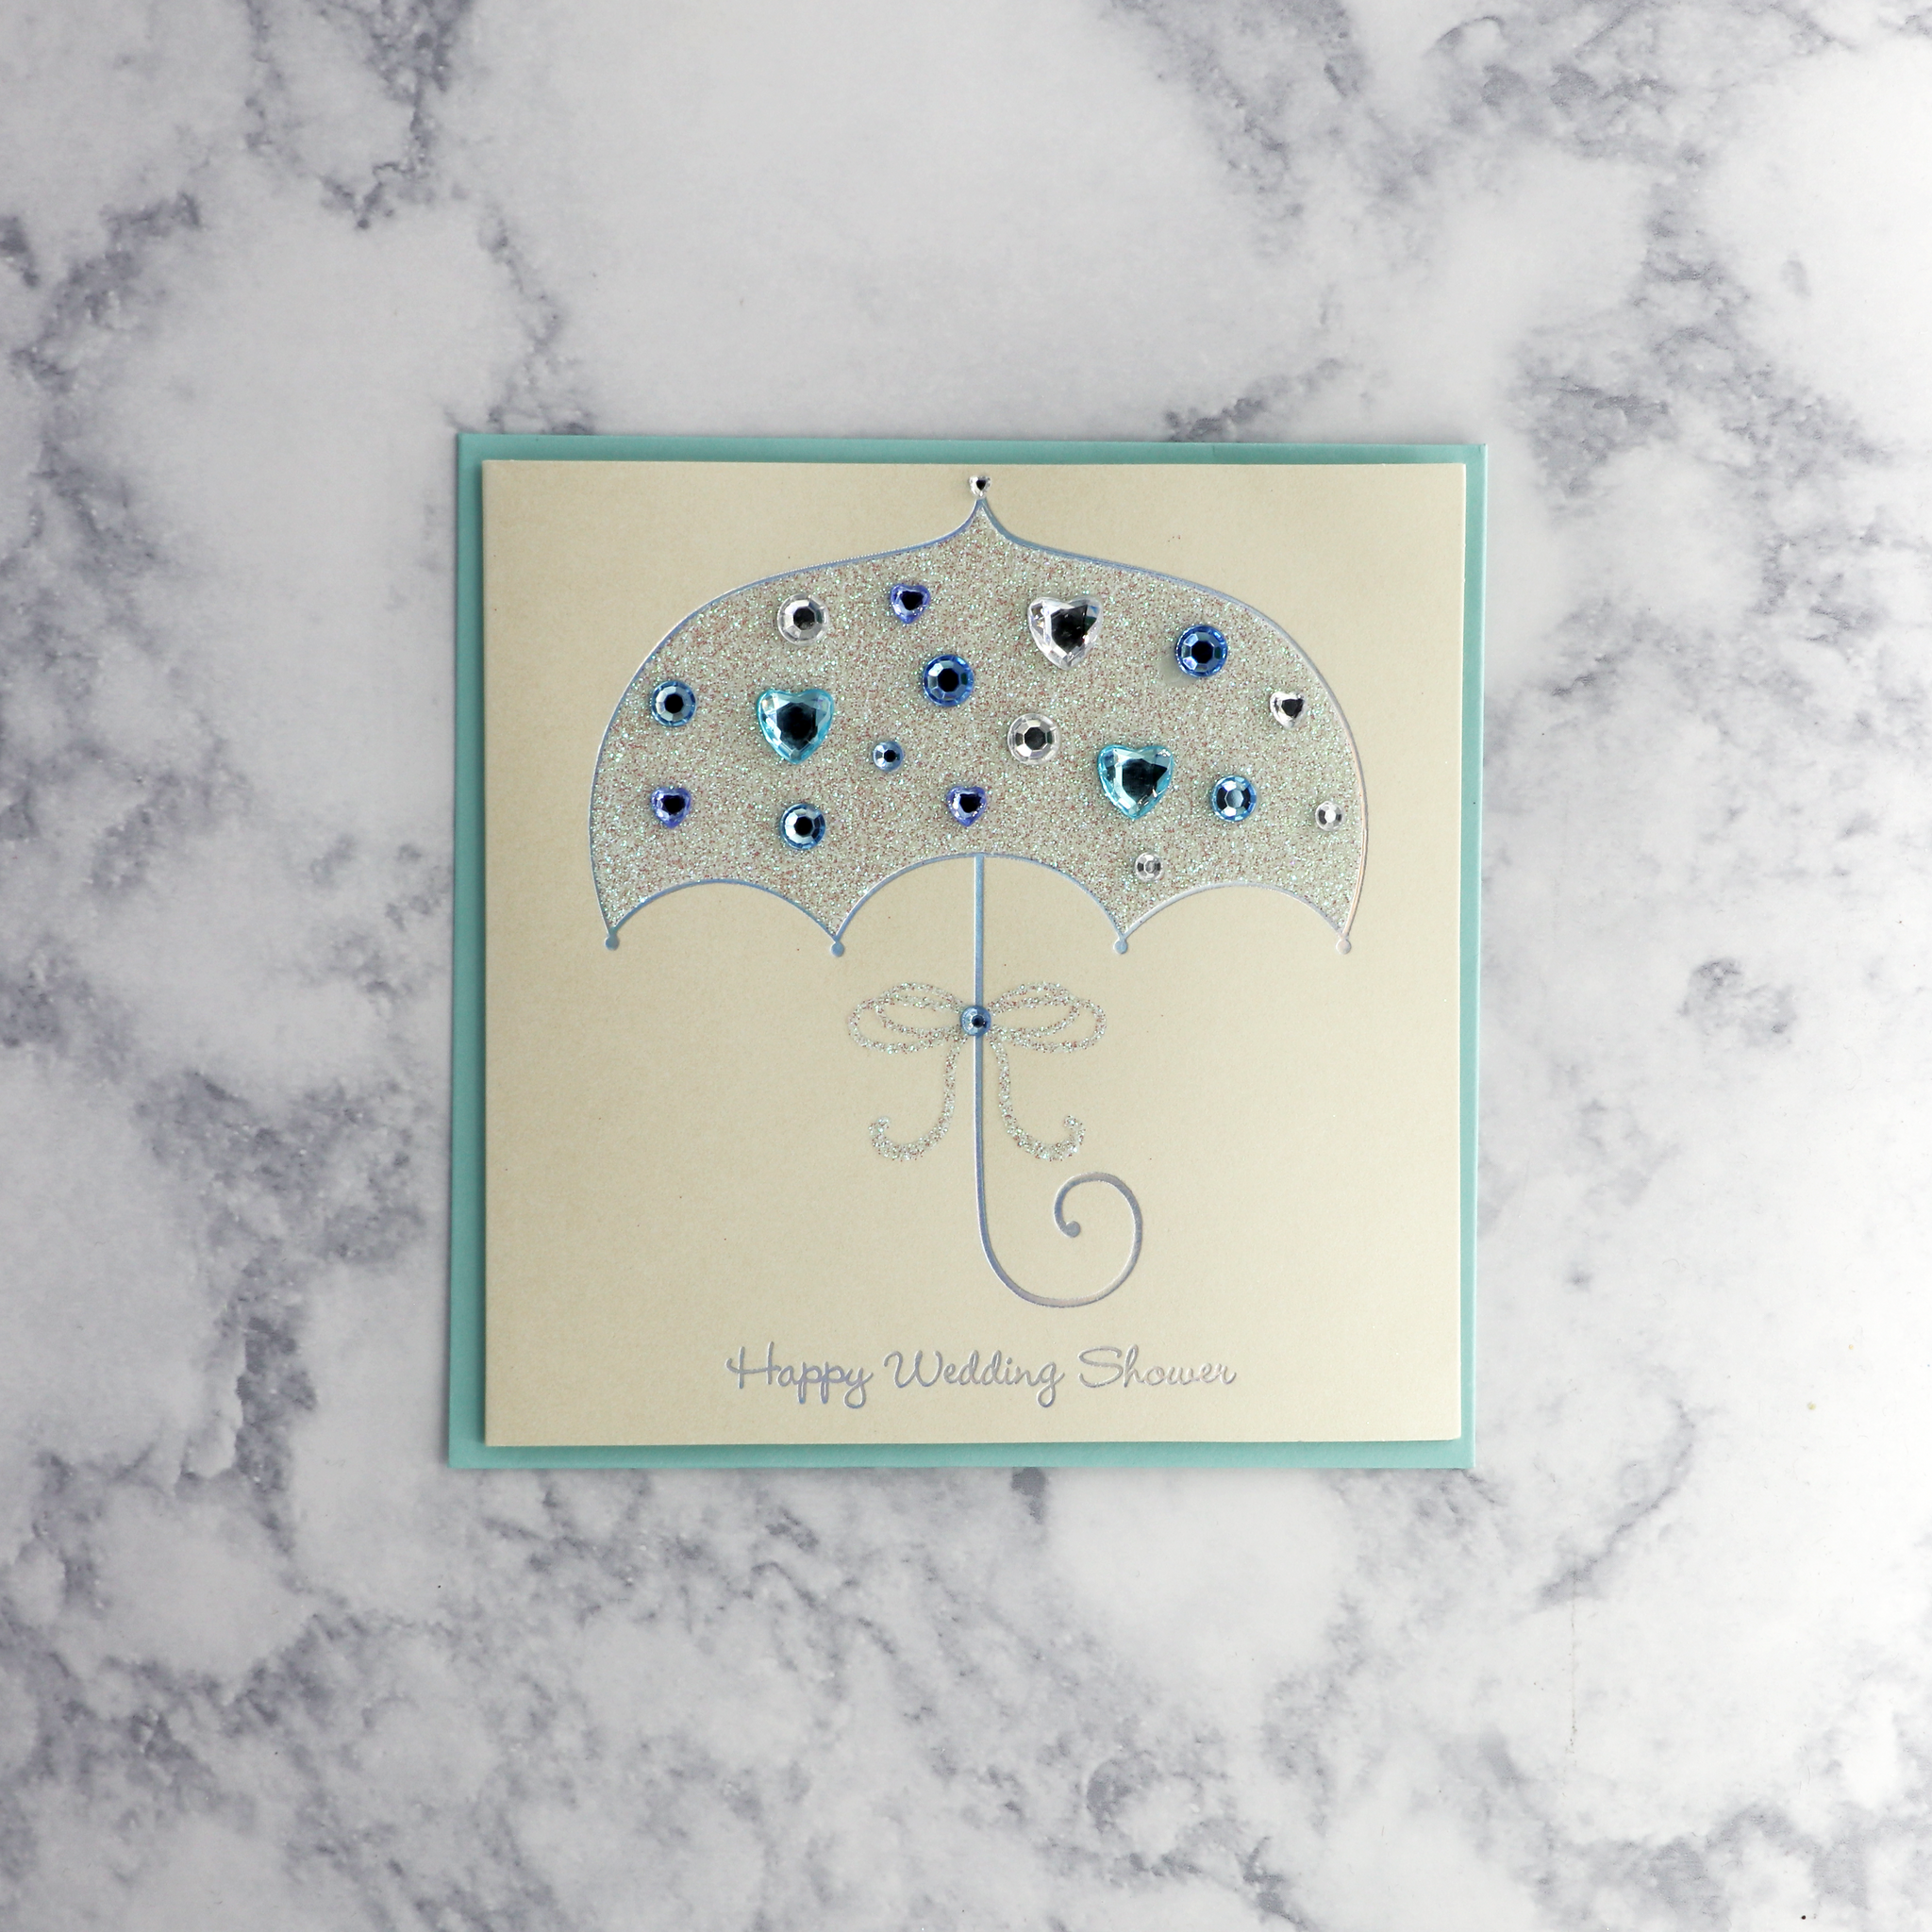 Glitter & Gemmed Umbrella Wedding Shower Card